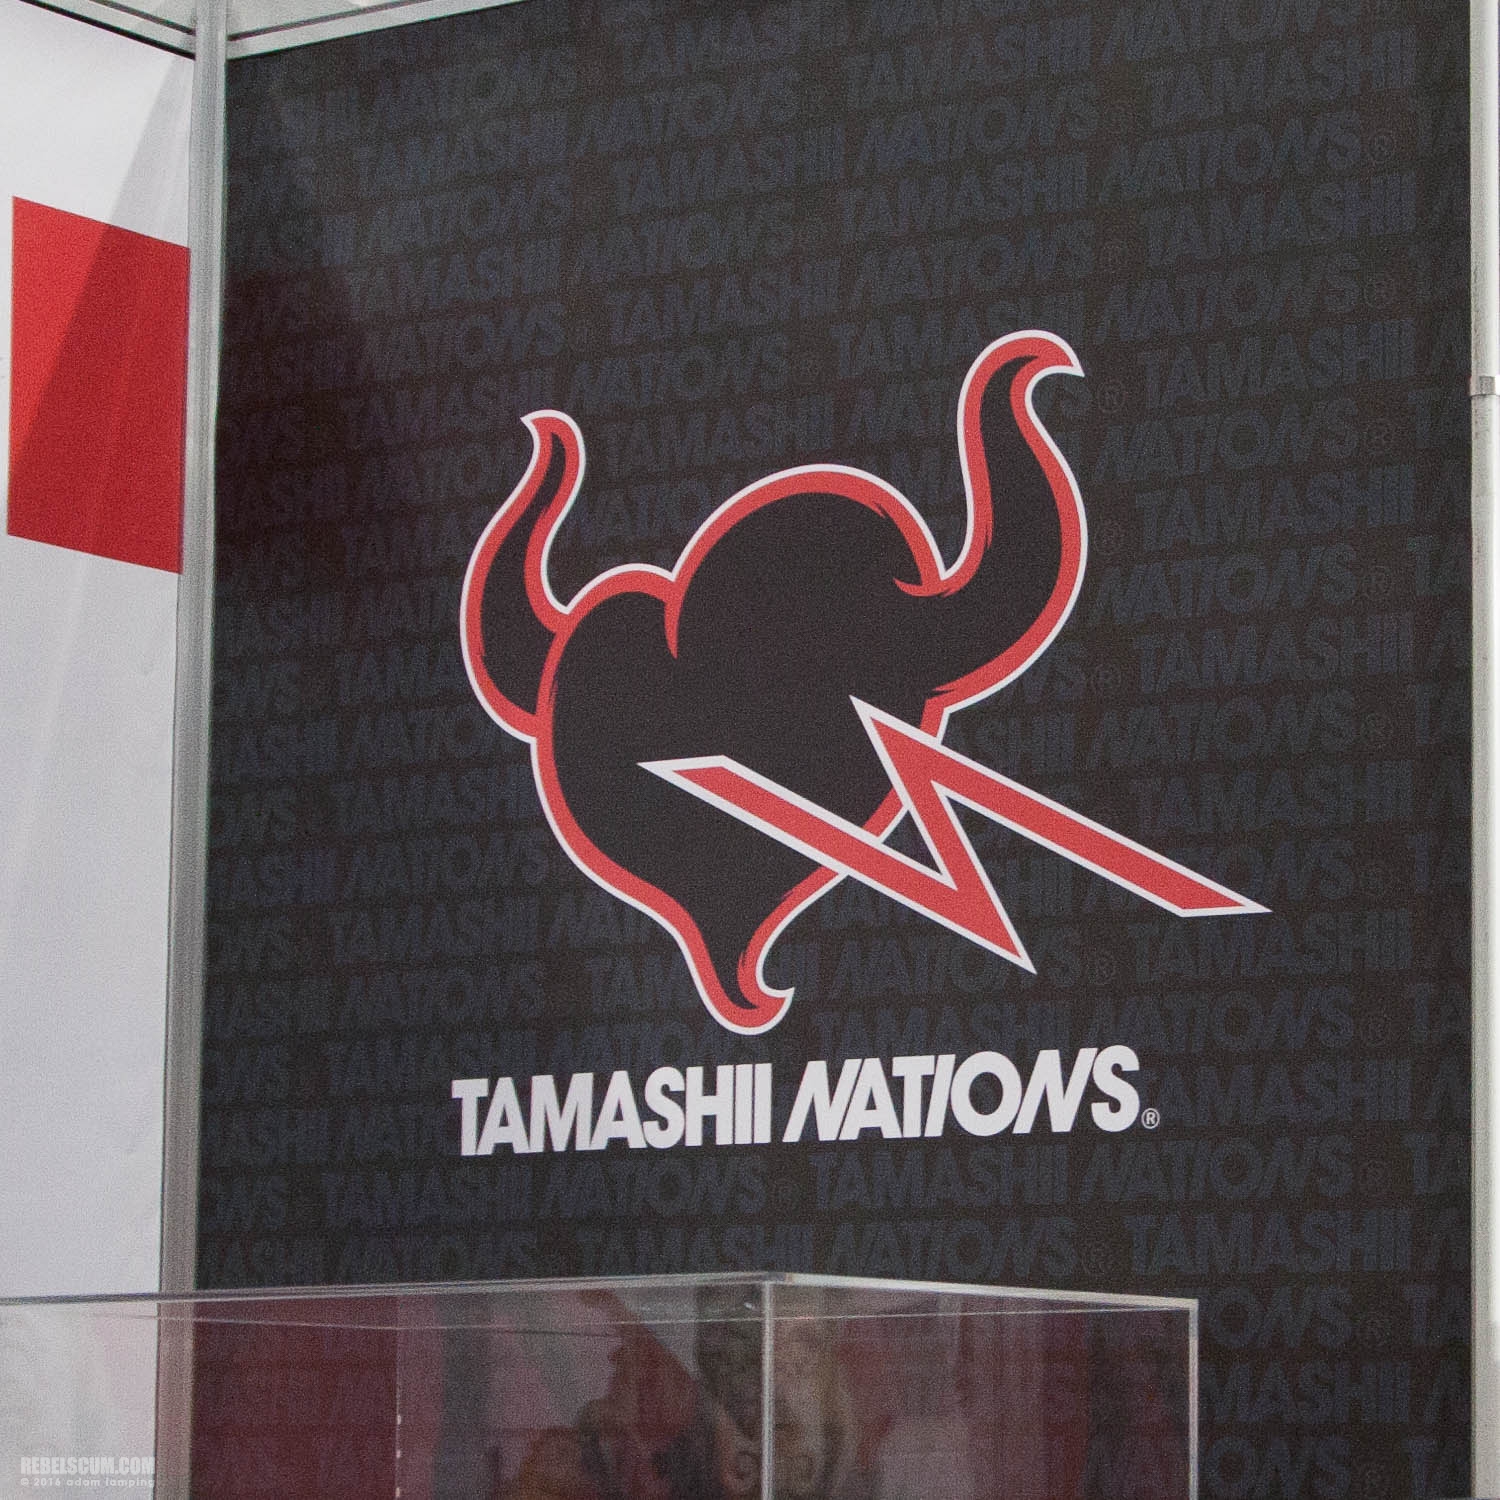 star-wars-celebration-tamashii-nations-booth-001.jpg